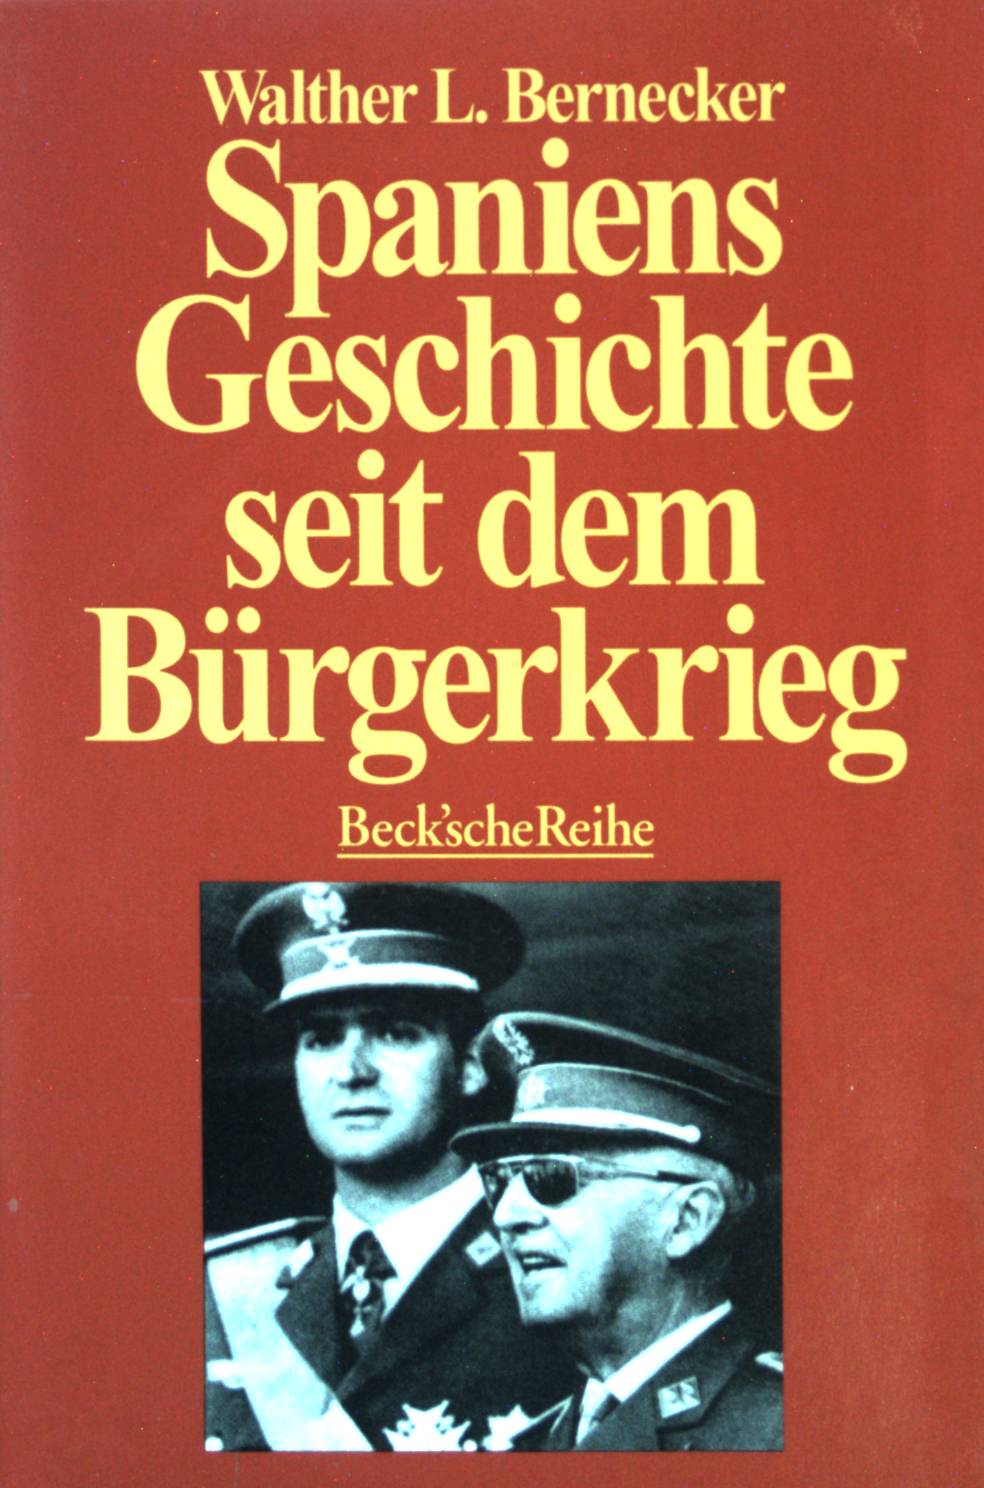 Spaniens Geschichte seit dem Bürgerkrieg. Beck'sche Reihe ; 284 - Bernecker, Walther L.